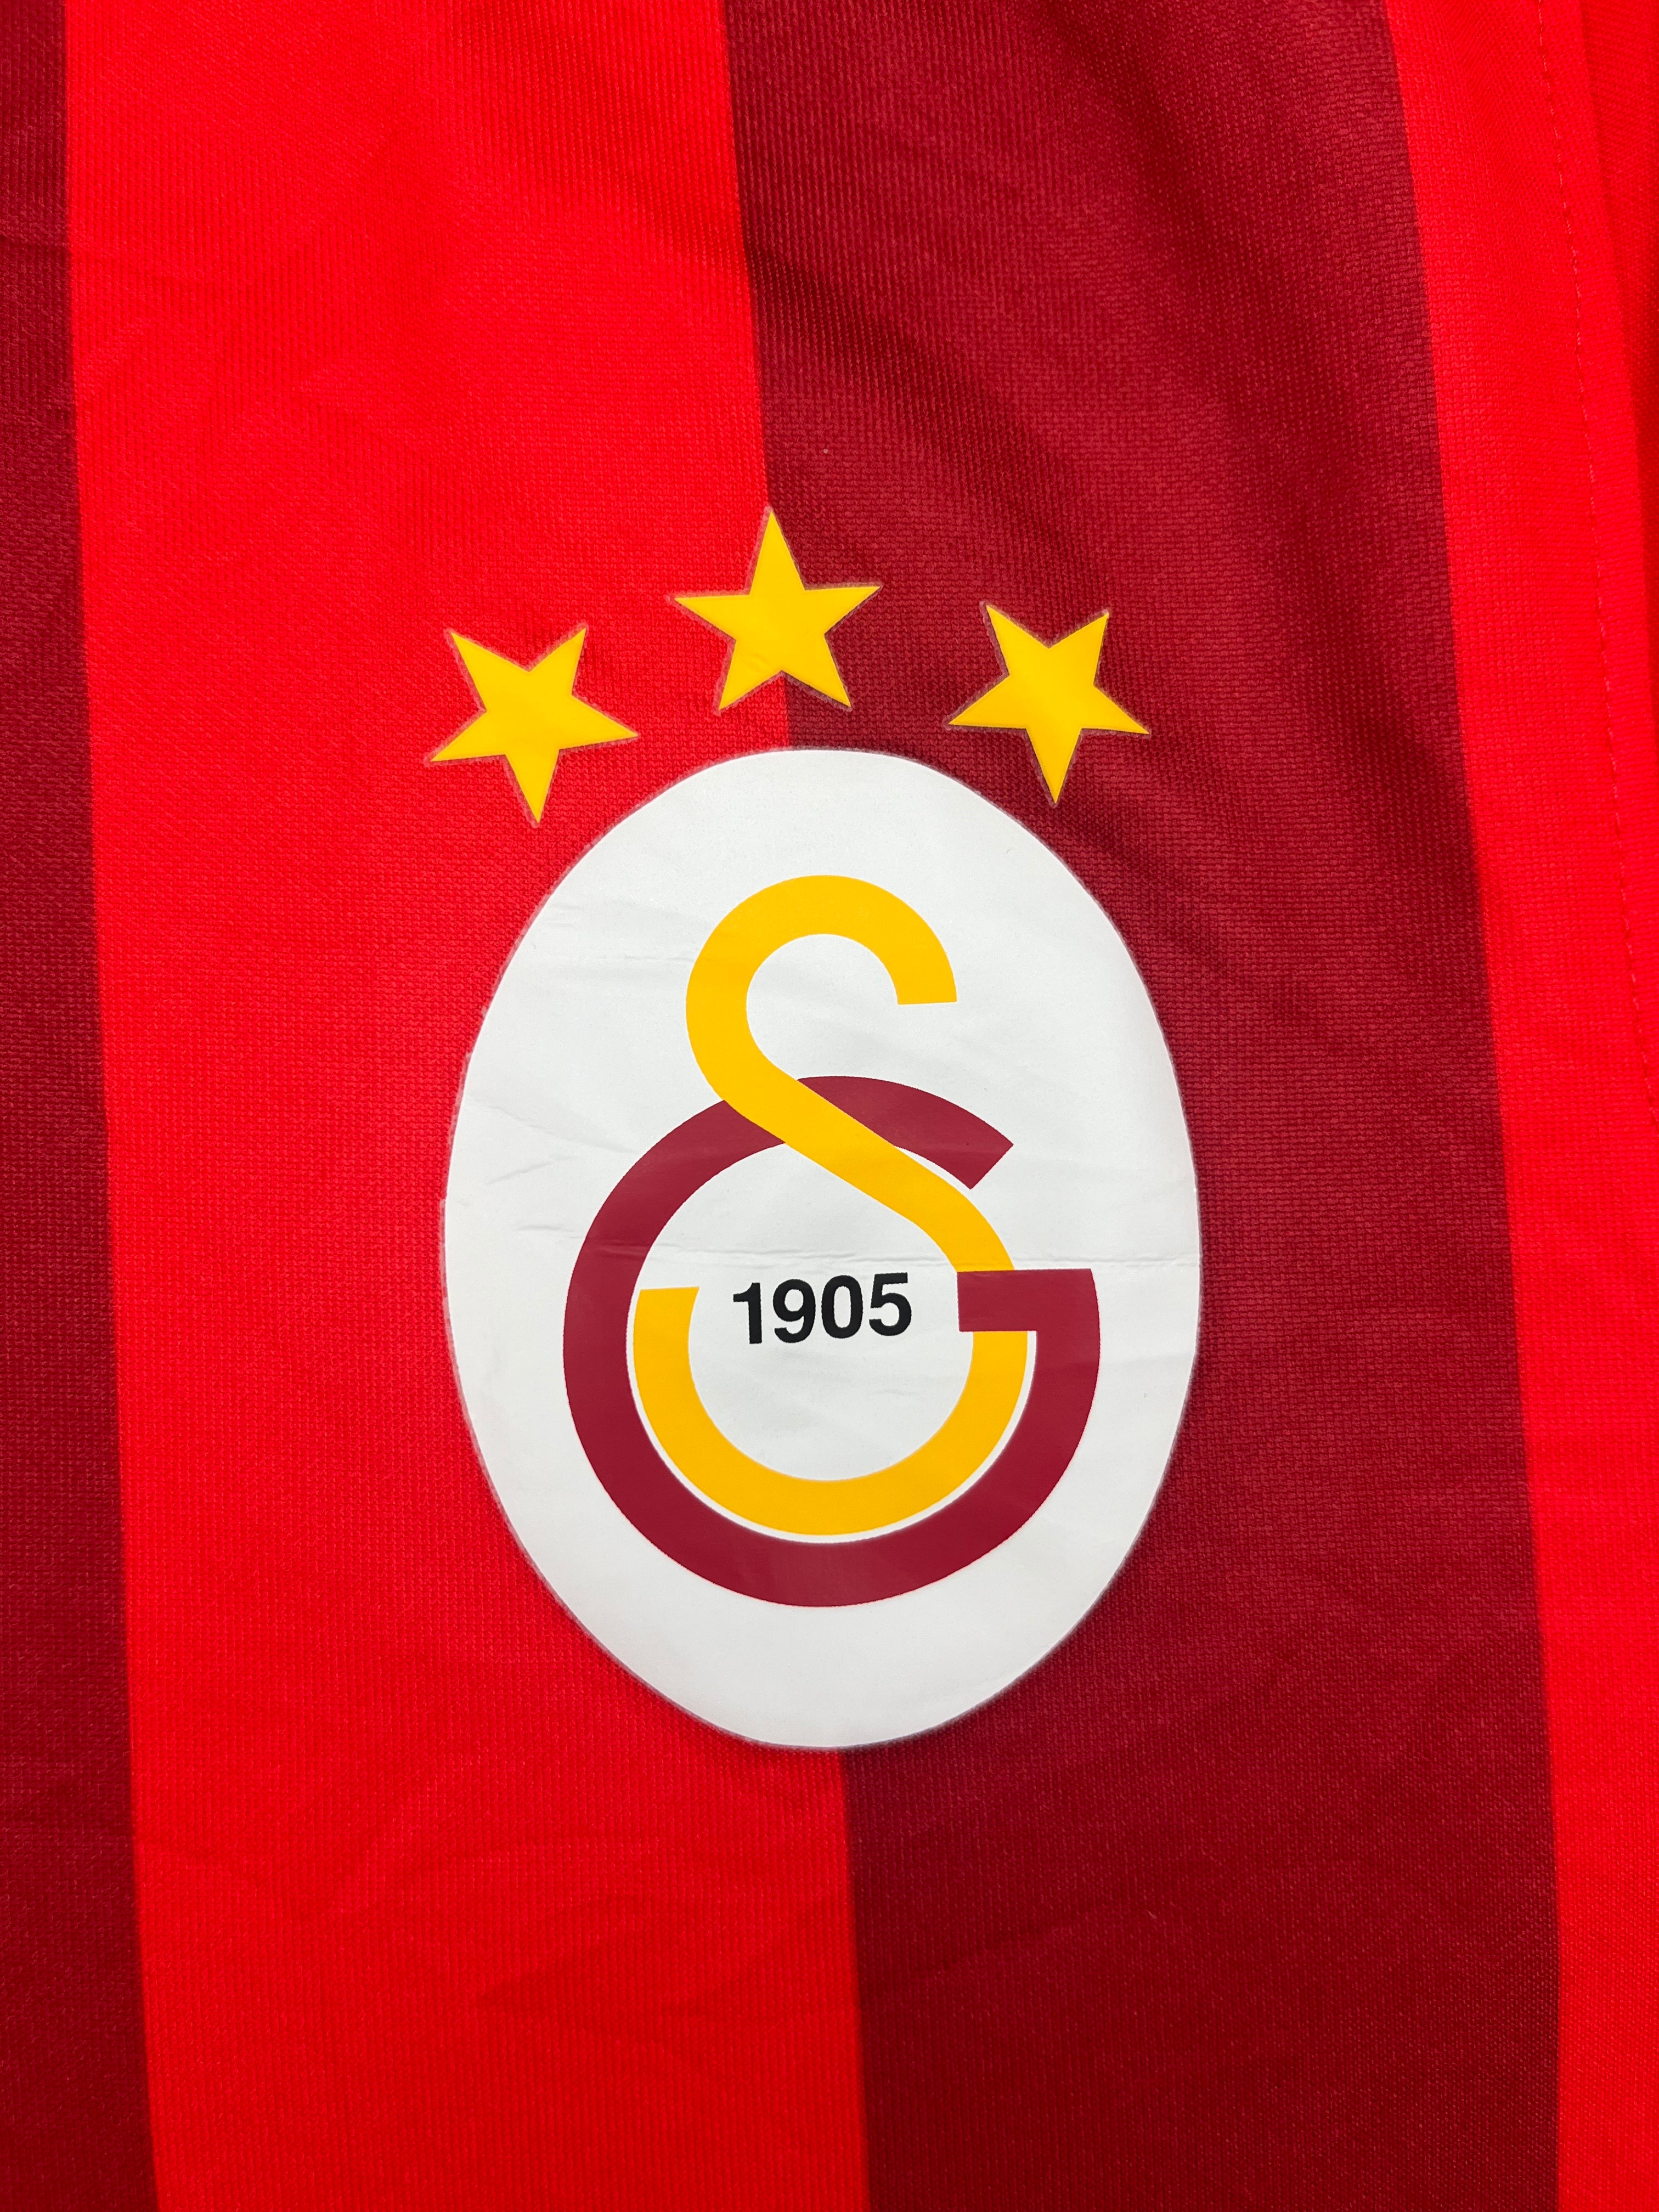 2013/14 Galatasaray Third Shirt (M) 9/10